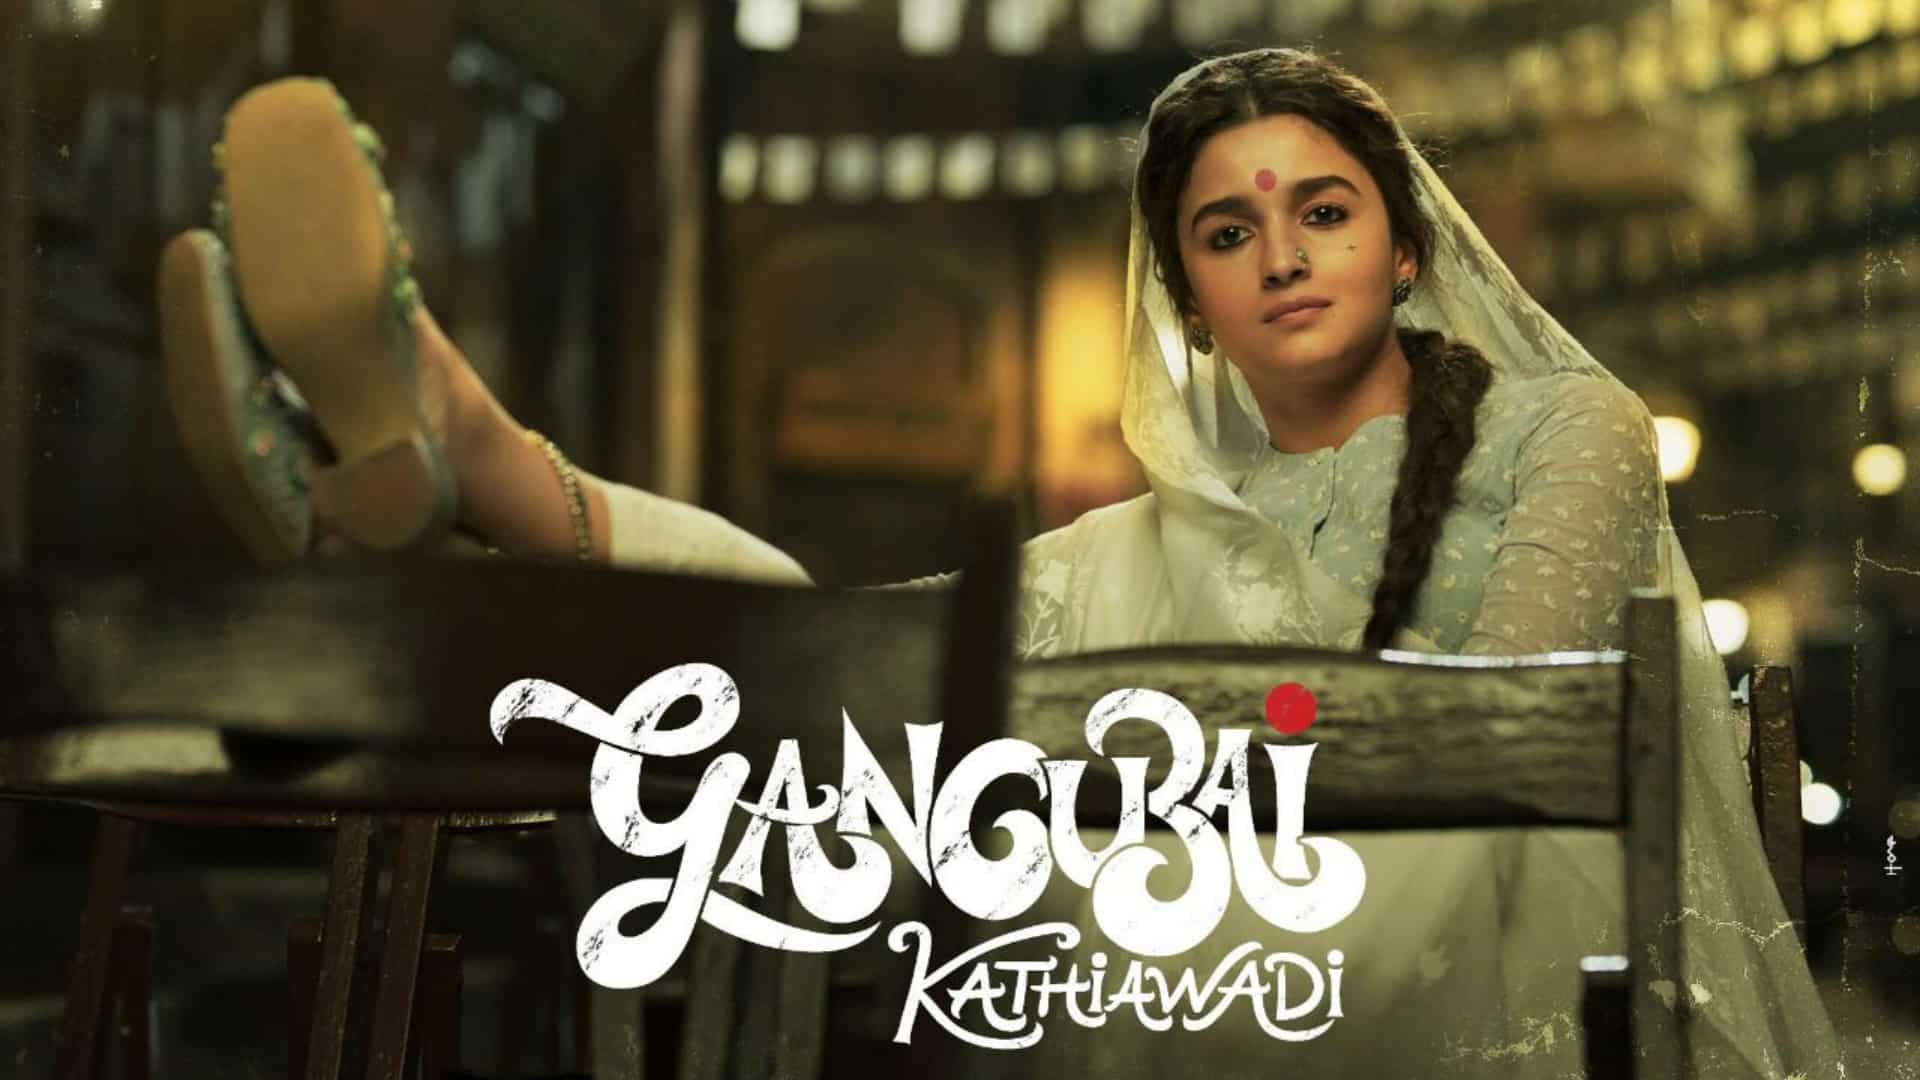 Watch Gangubai Kathiawadi